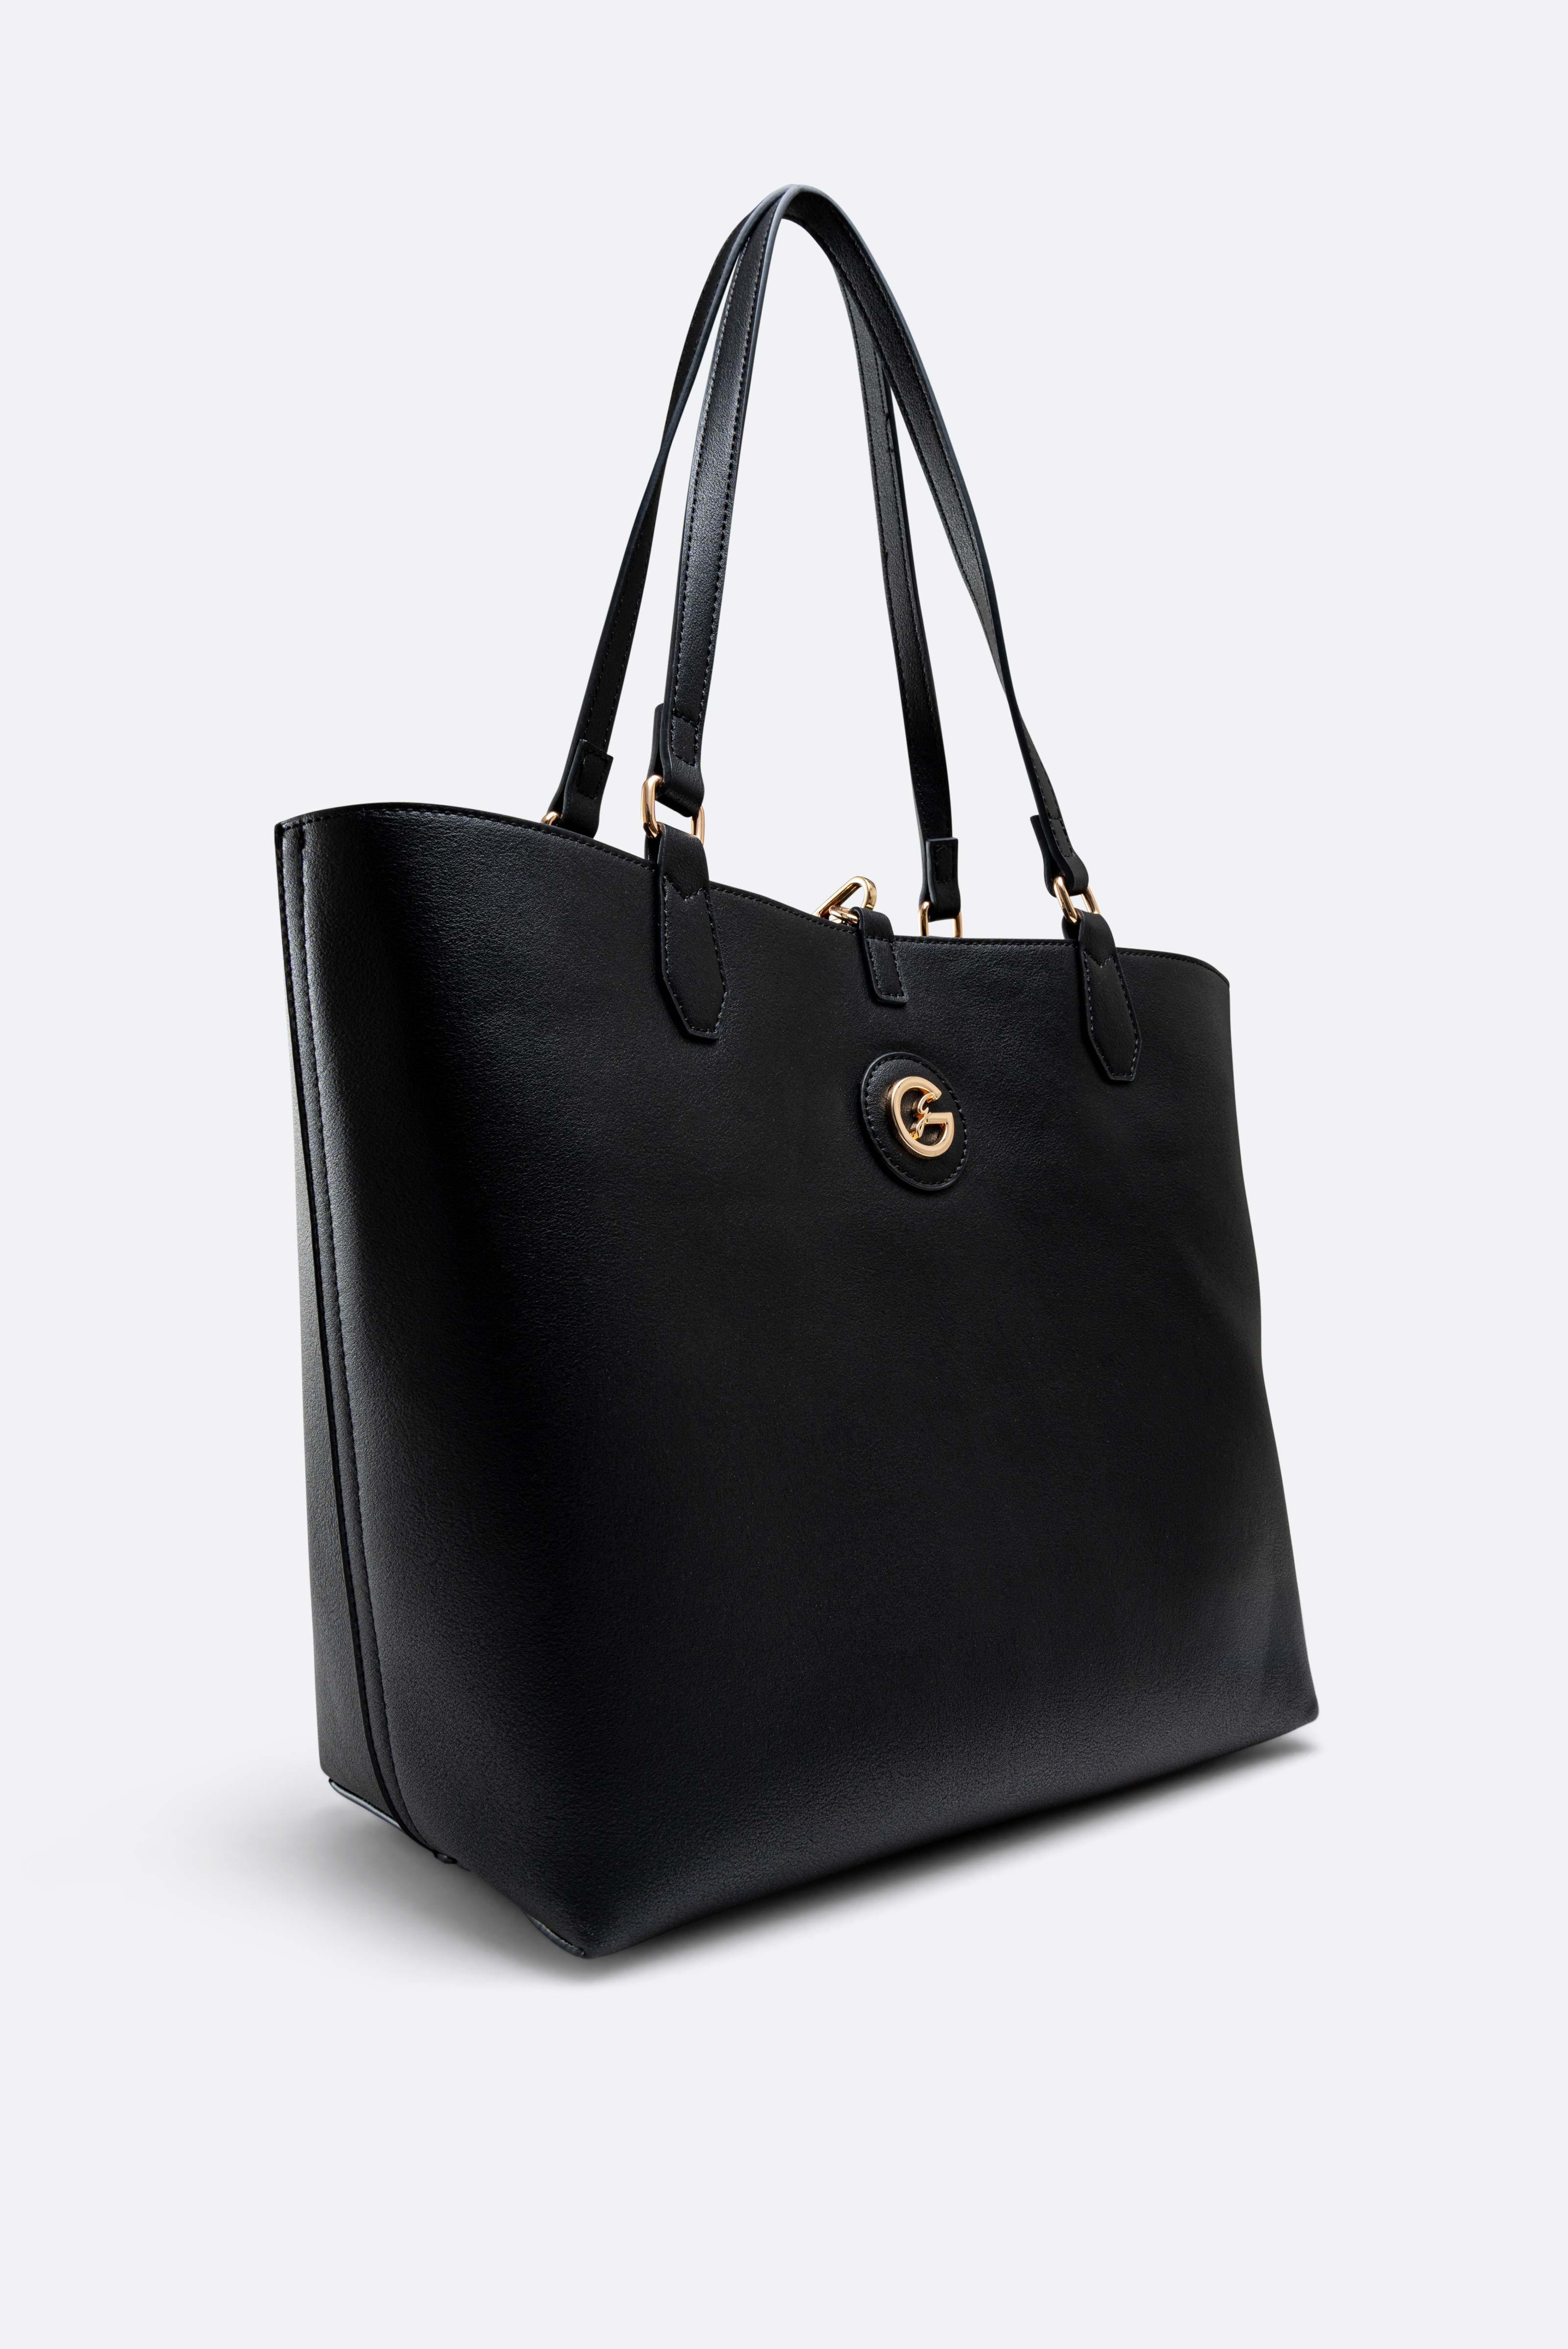 Shopping bag small reversible Teodosia black con tracolla